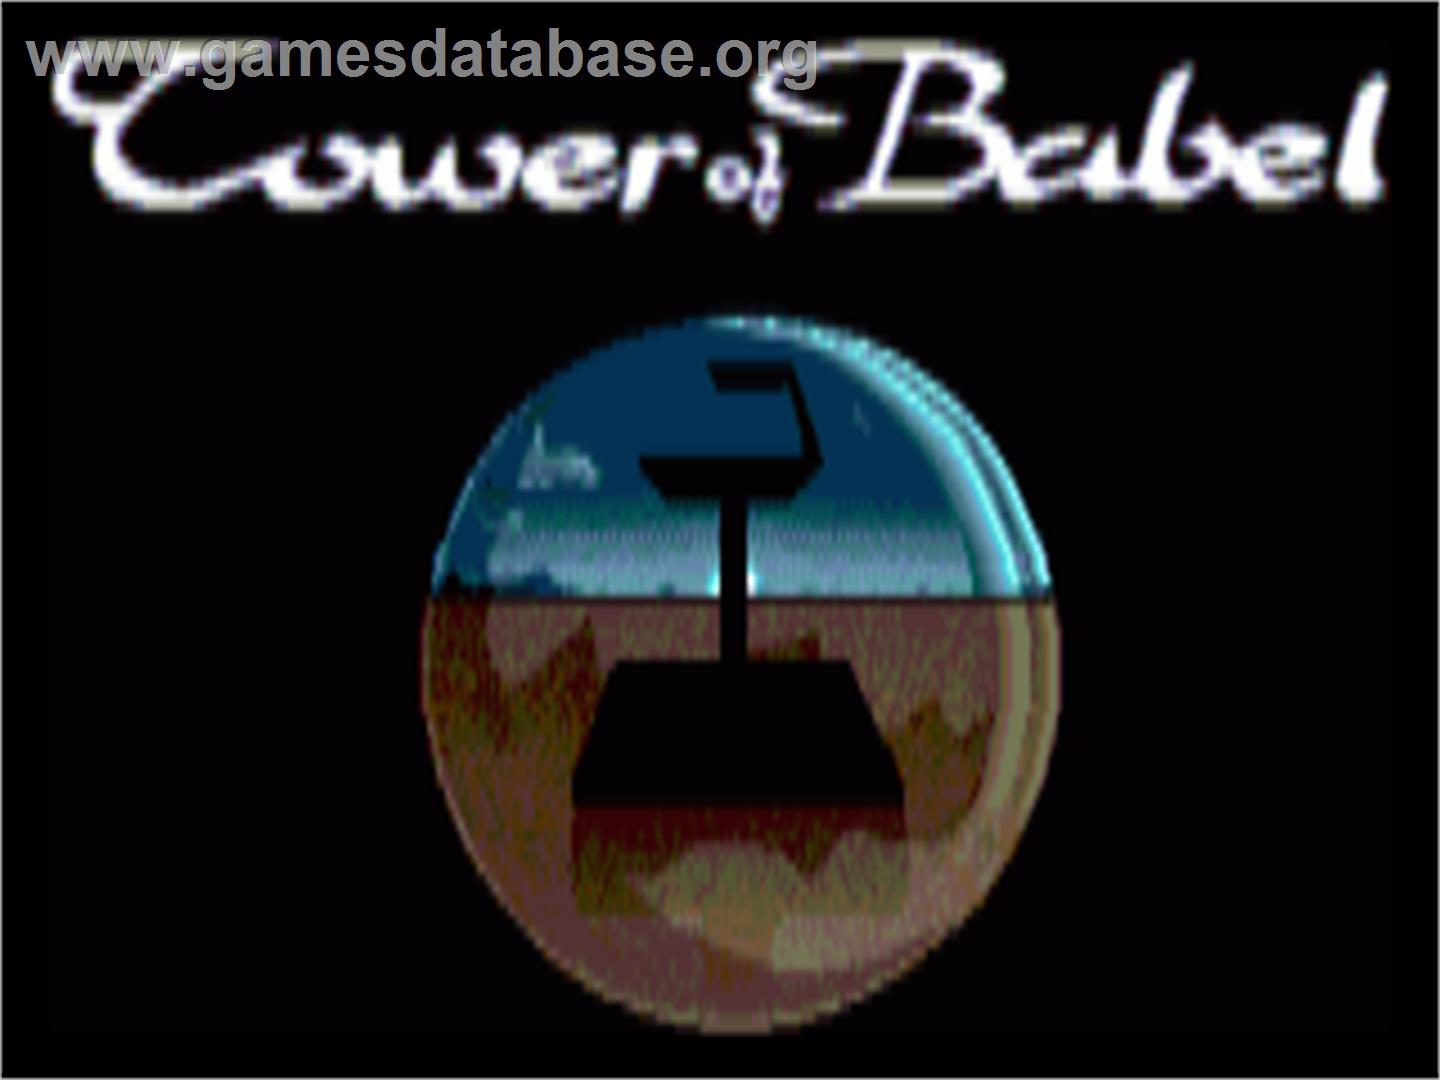 Tower of Babel - Commodore Amiga - Artwork - Title Screen